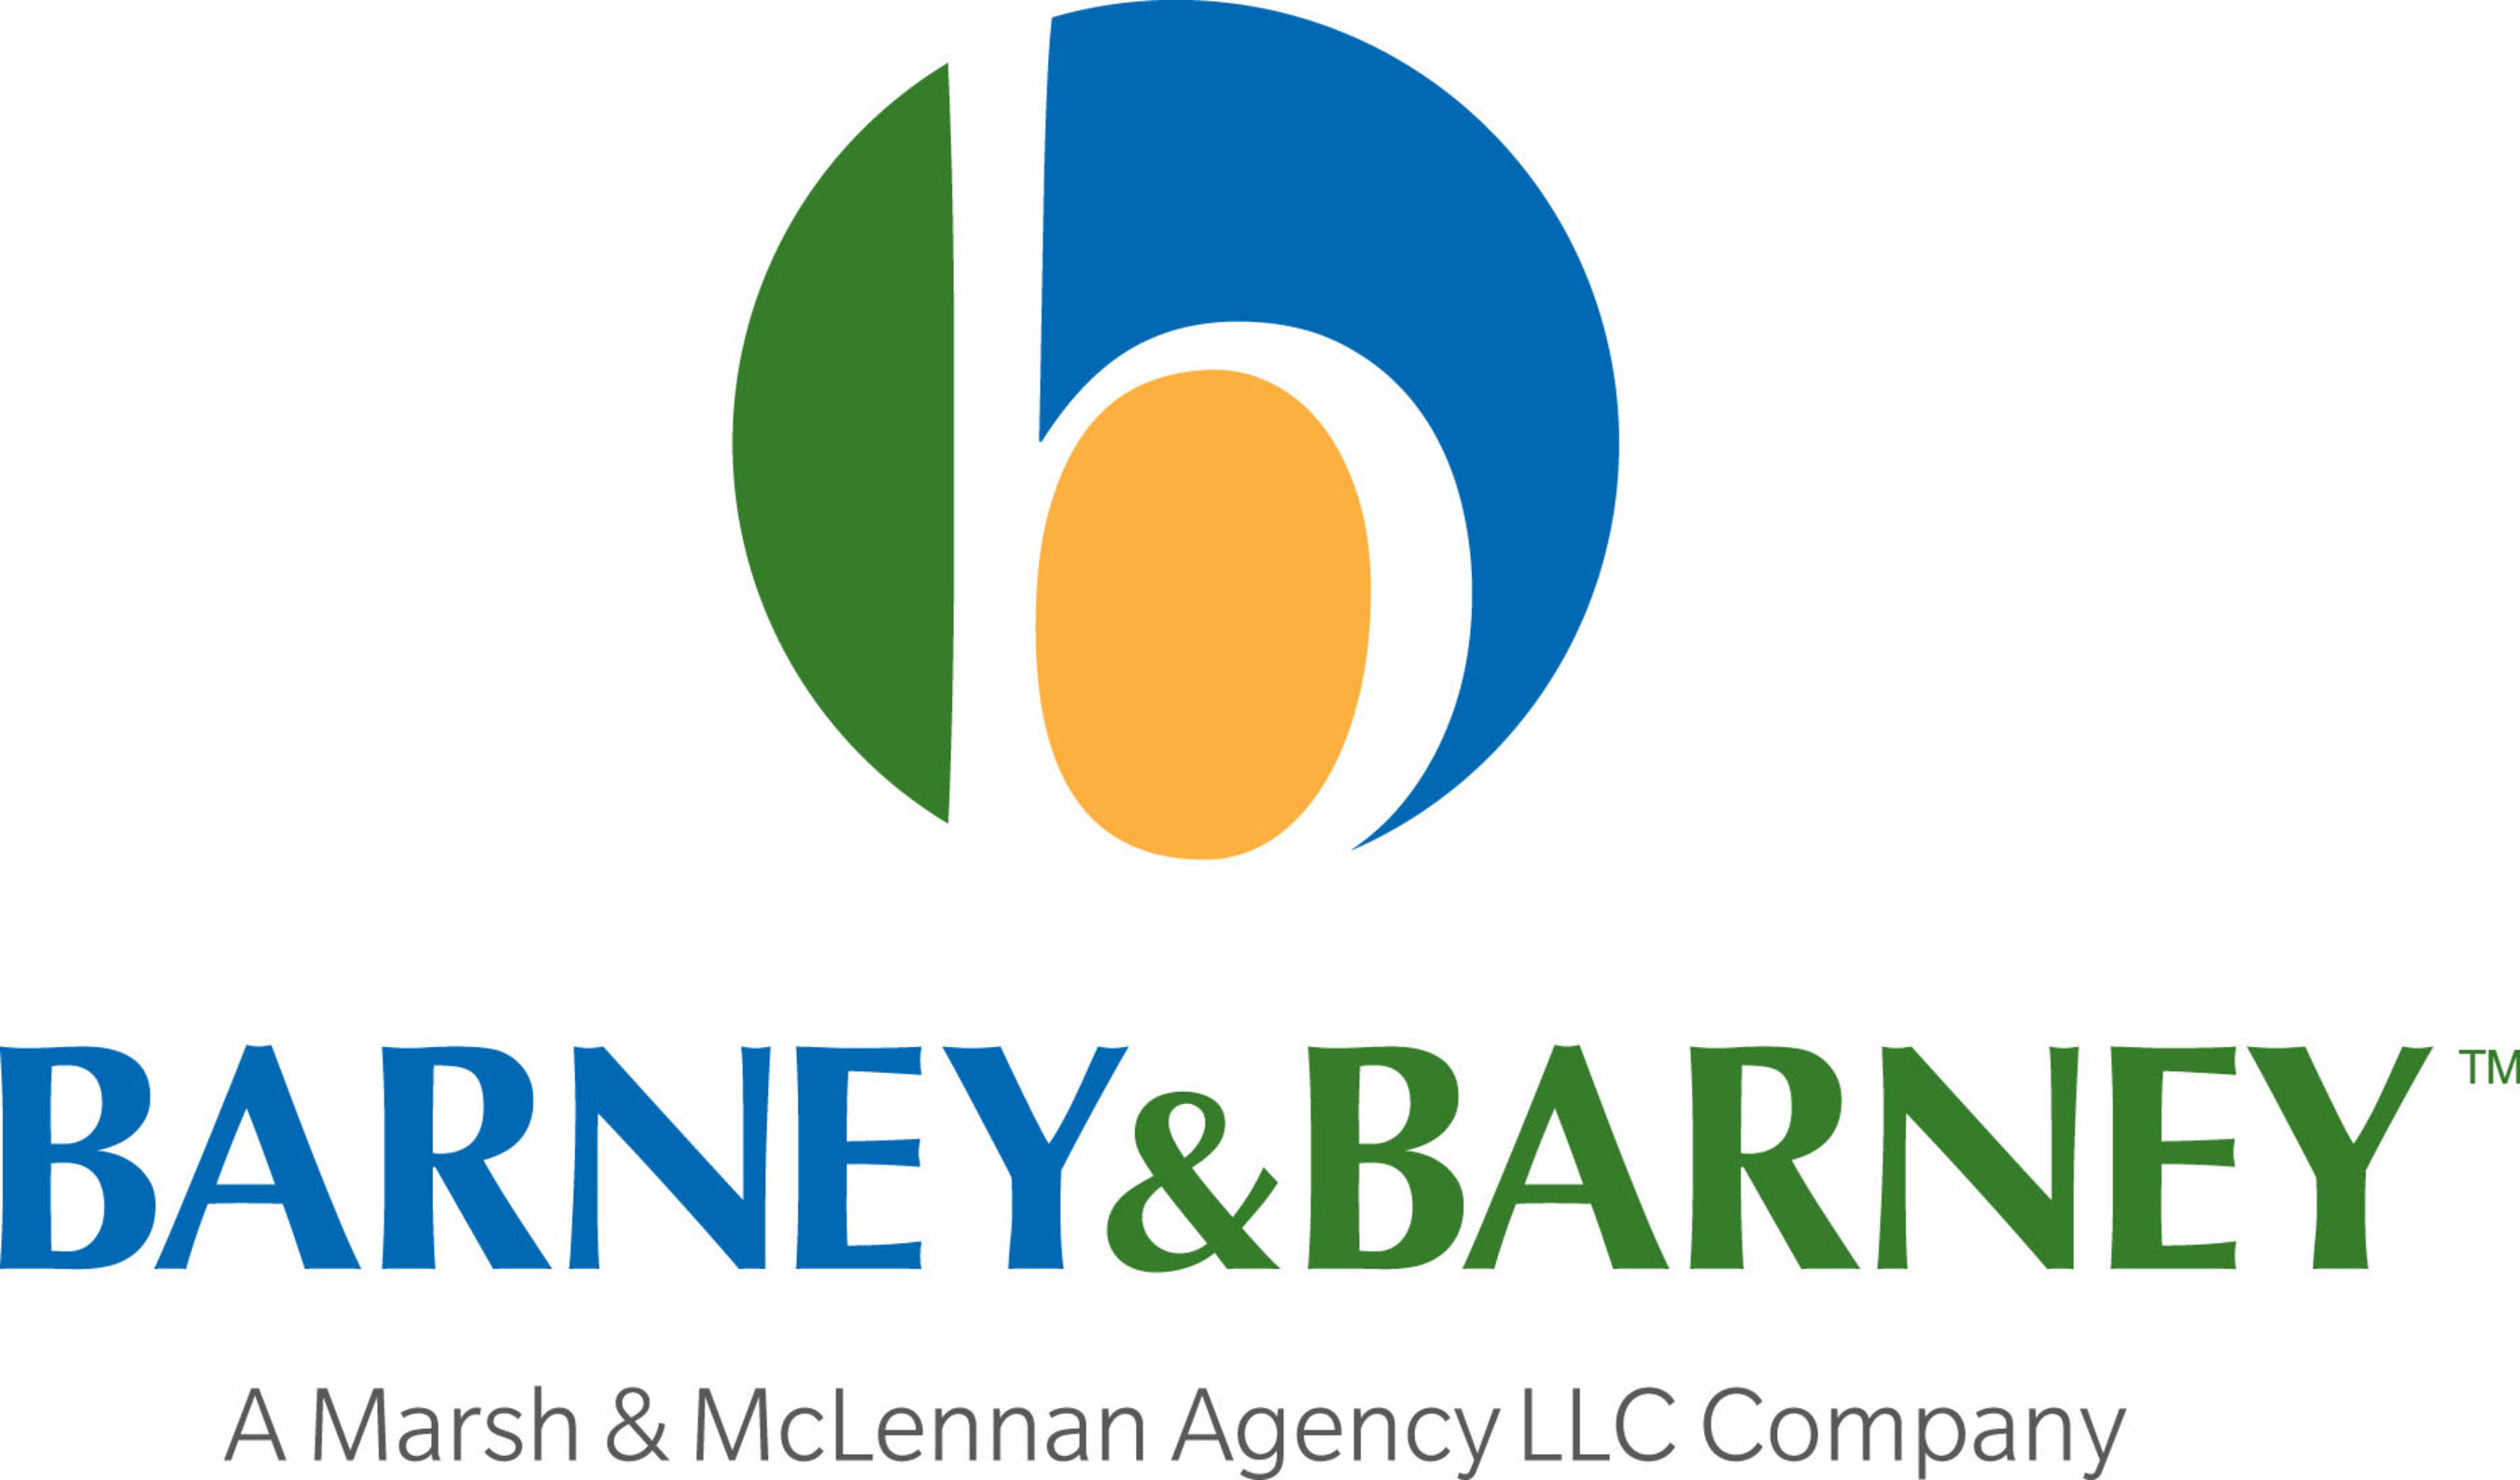 Barney & Barney, LLC logo.